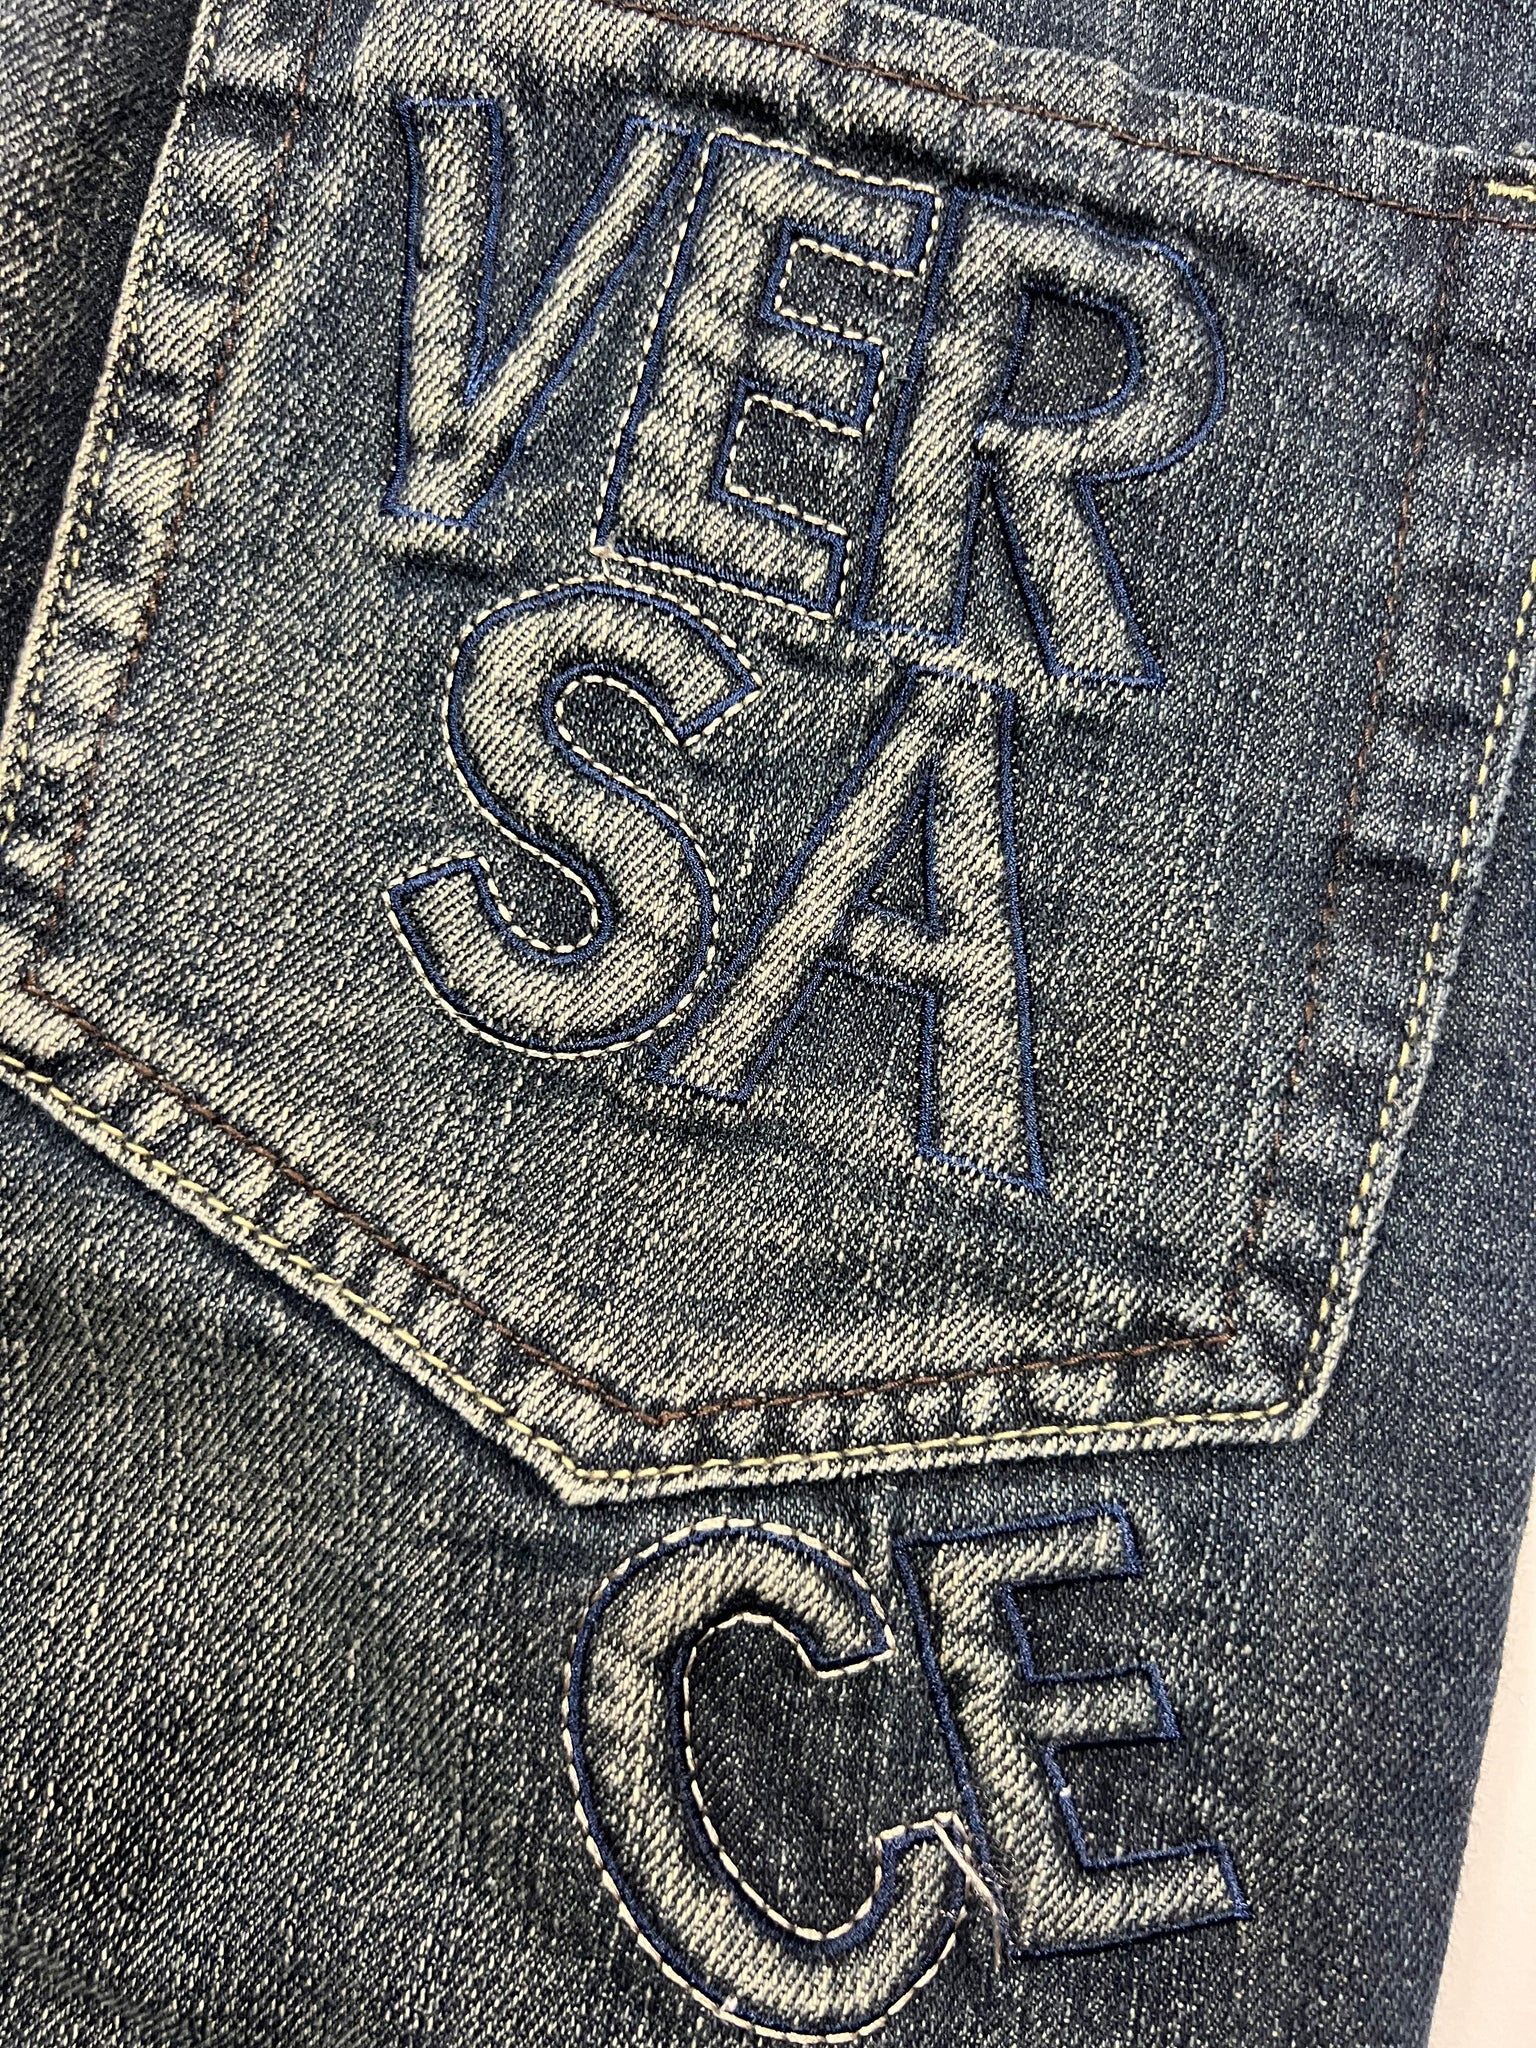 Versace Jeans (34)